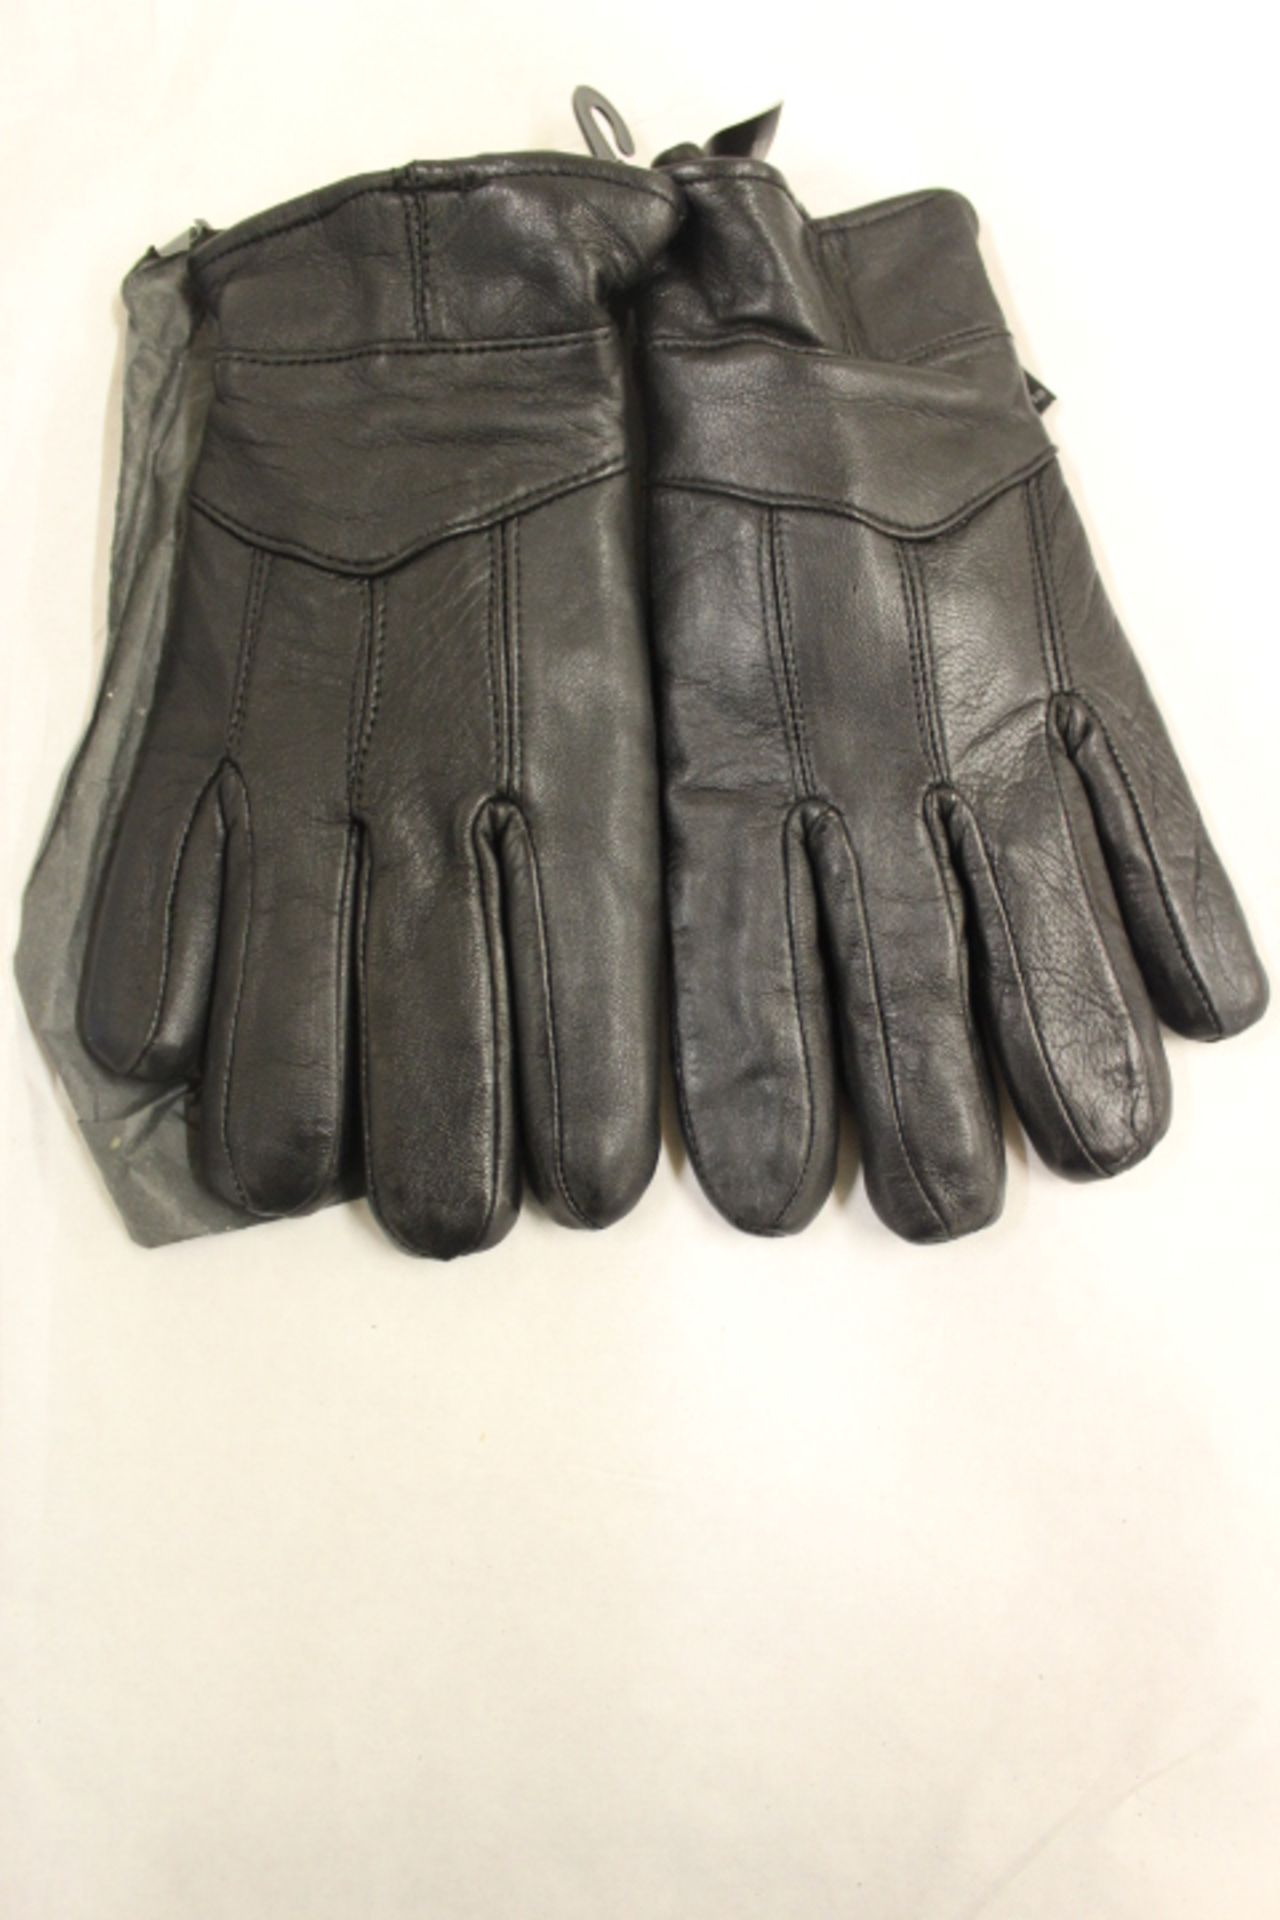 V Thomas Calvi  Heatlocker Gents  Black leather gloves size small